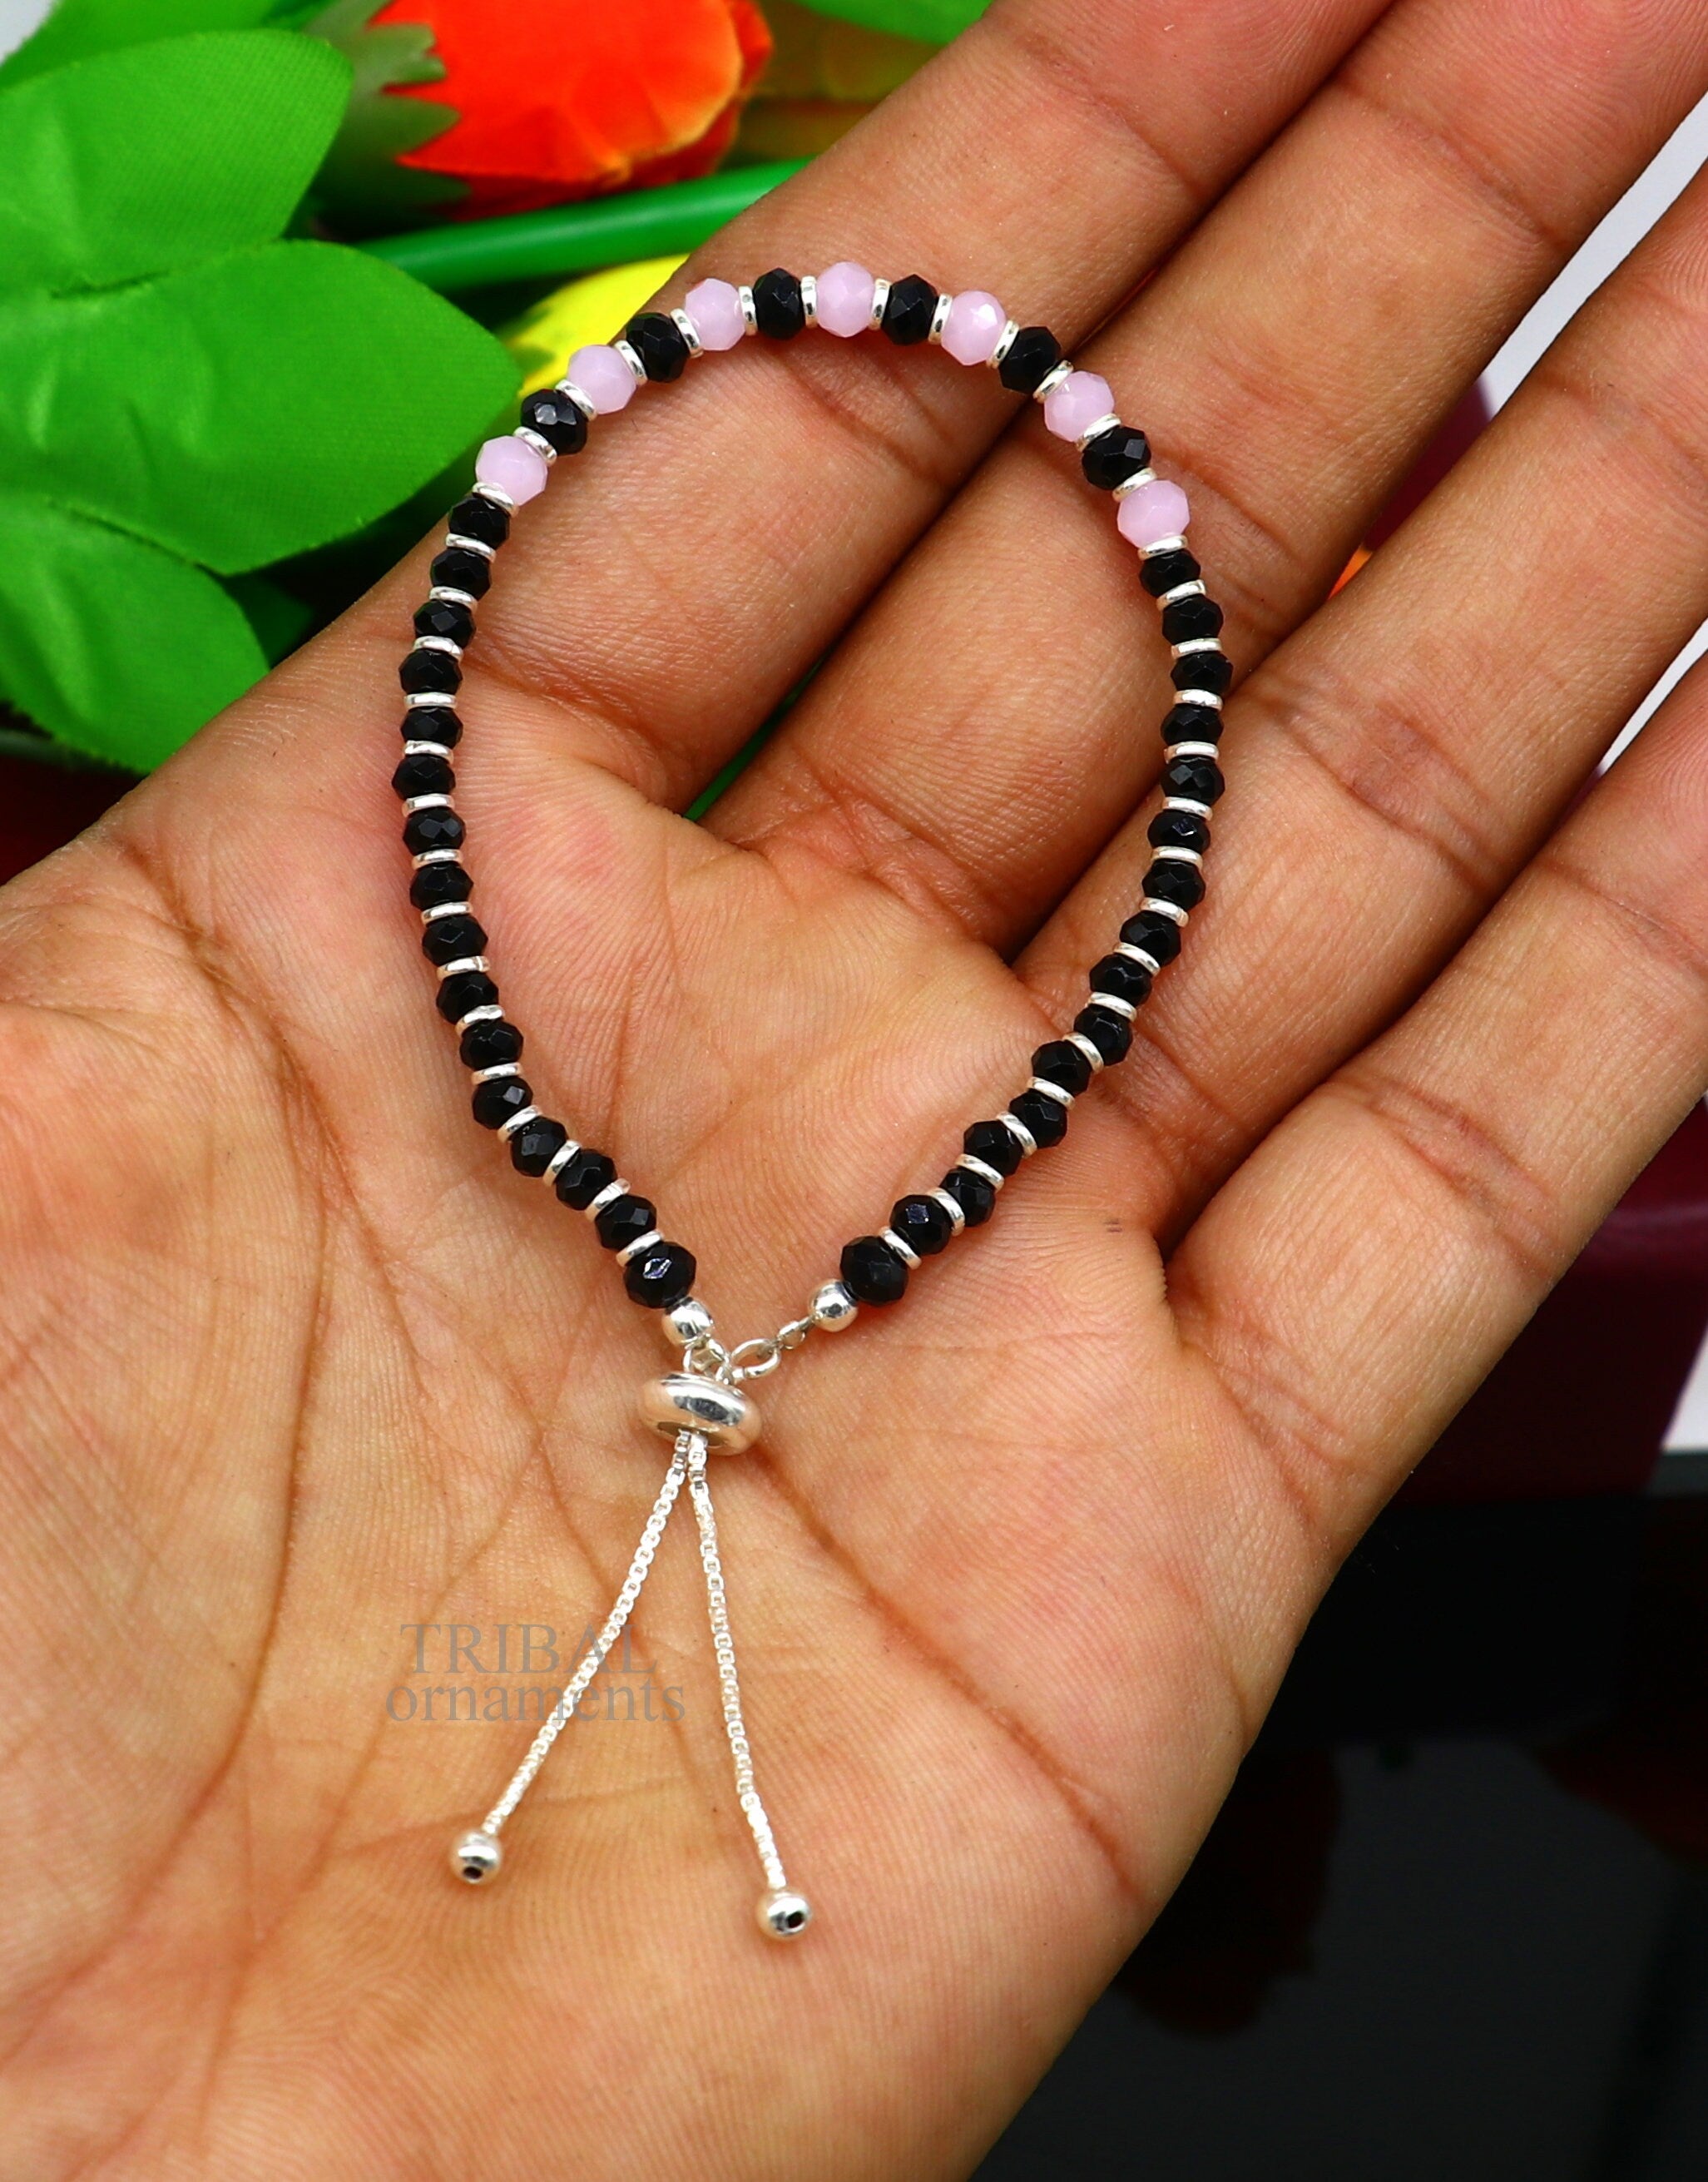 Girl/Boy Handmade Personalized Alphabet Beads Charm Friend Bracelet, Any  Name! | eBay